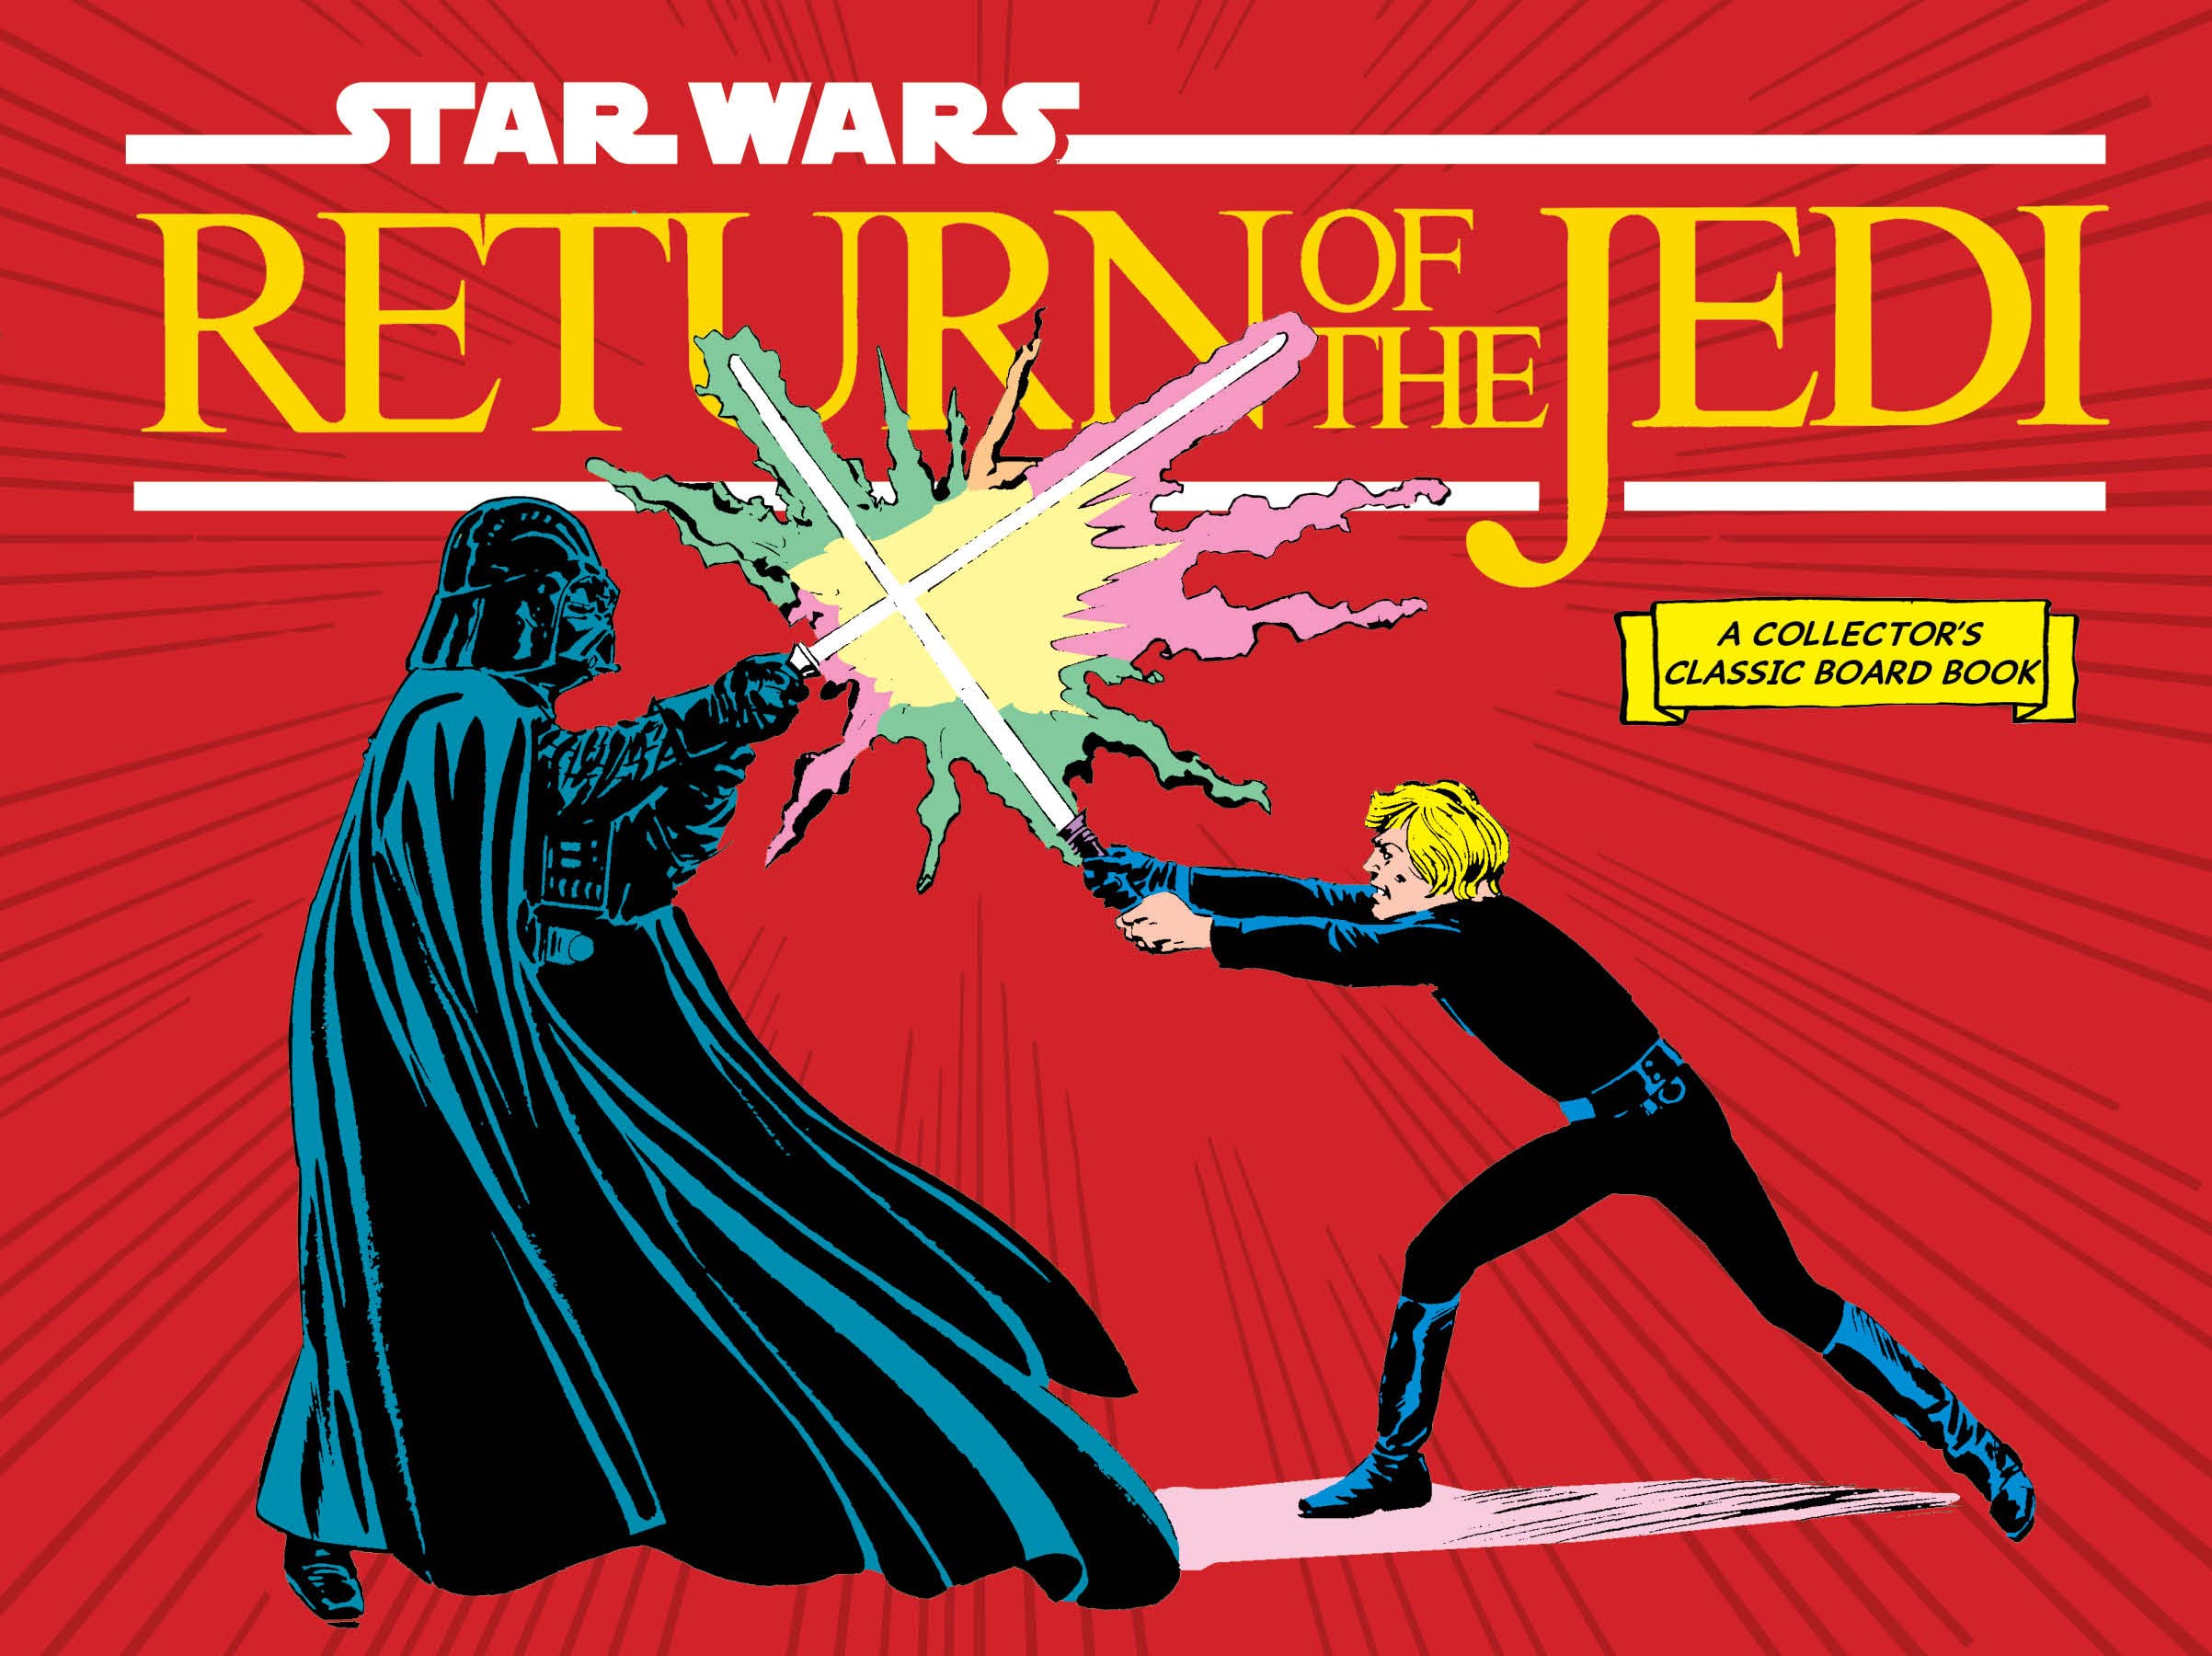 Return of the Jedi: A Collector's Classic Board Book